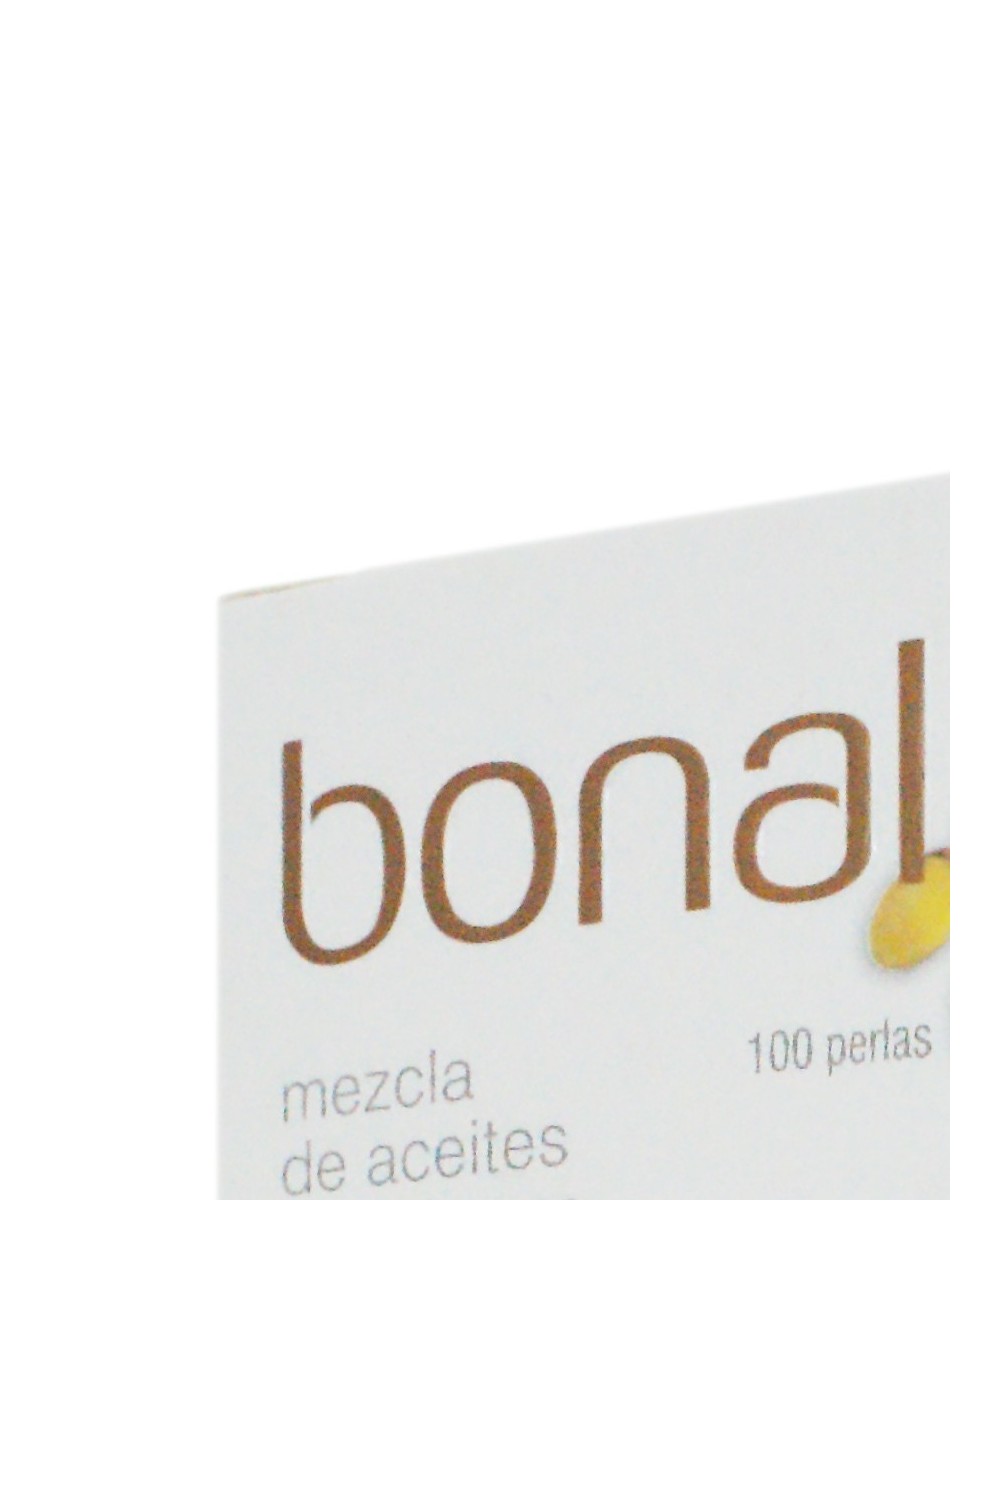 Soria Bonalin 500 Mg 100 Perlas